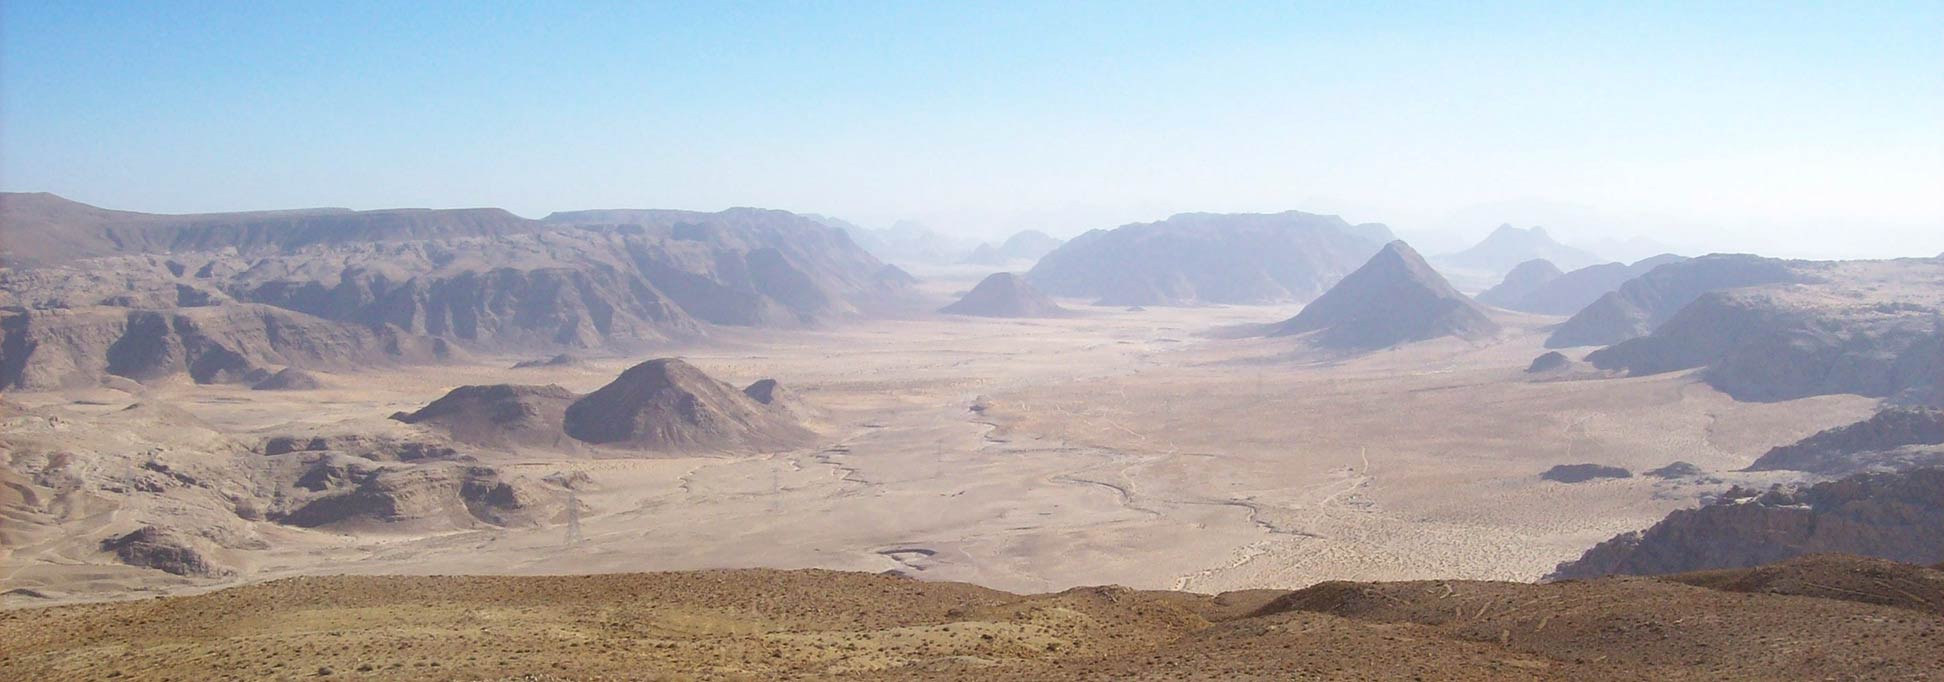 Landscape of Wadi Rum in southern Jordan